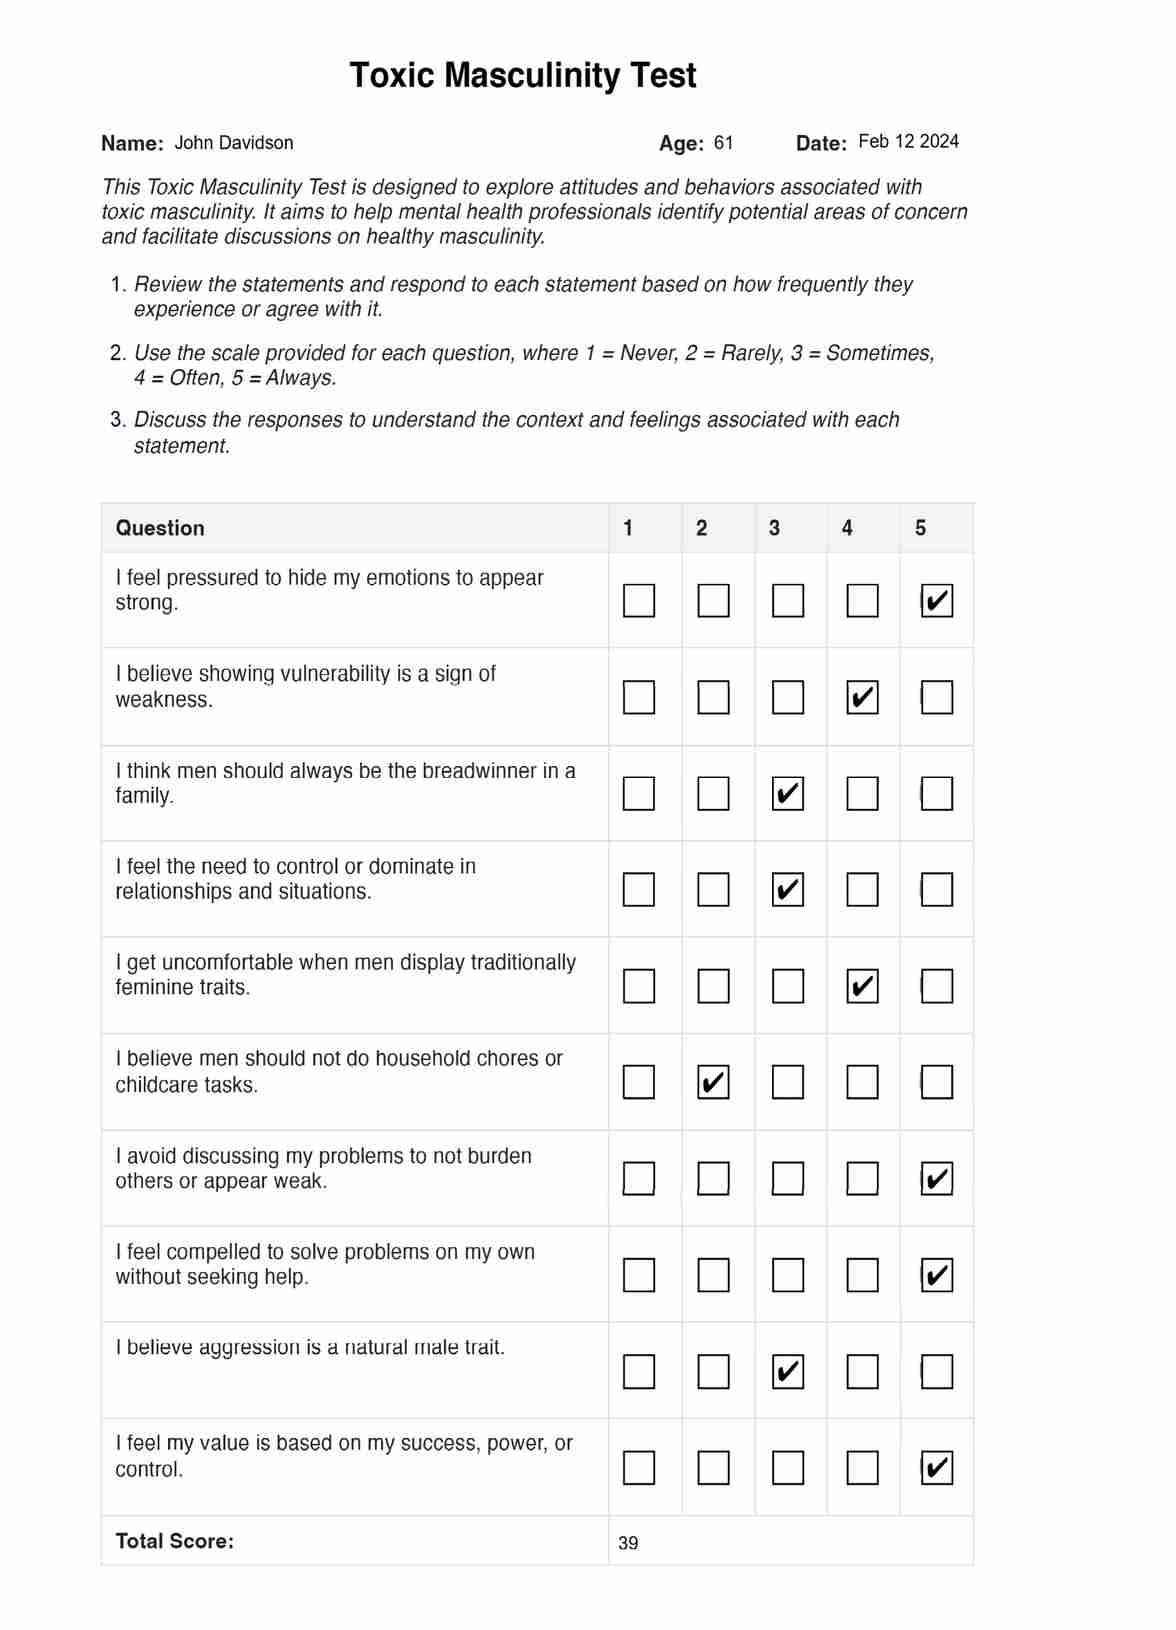 Toxic Masculinity Test PDF Example